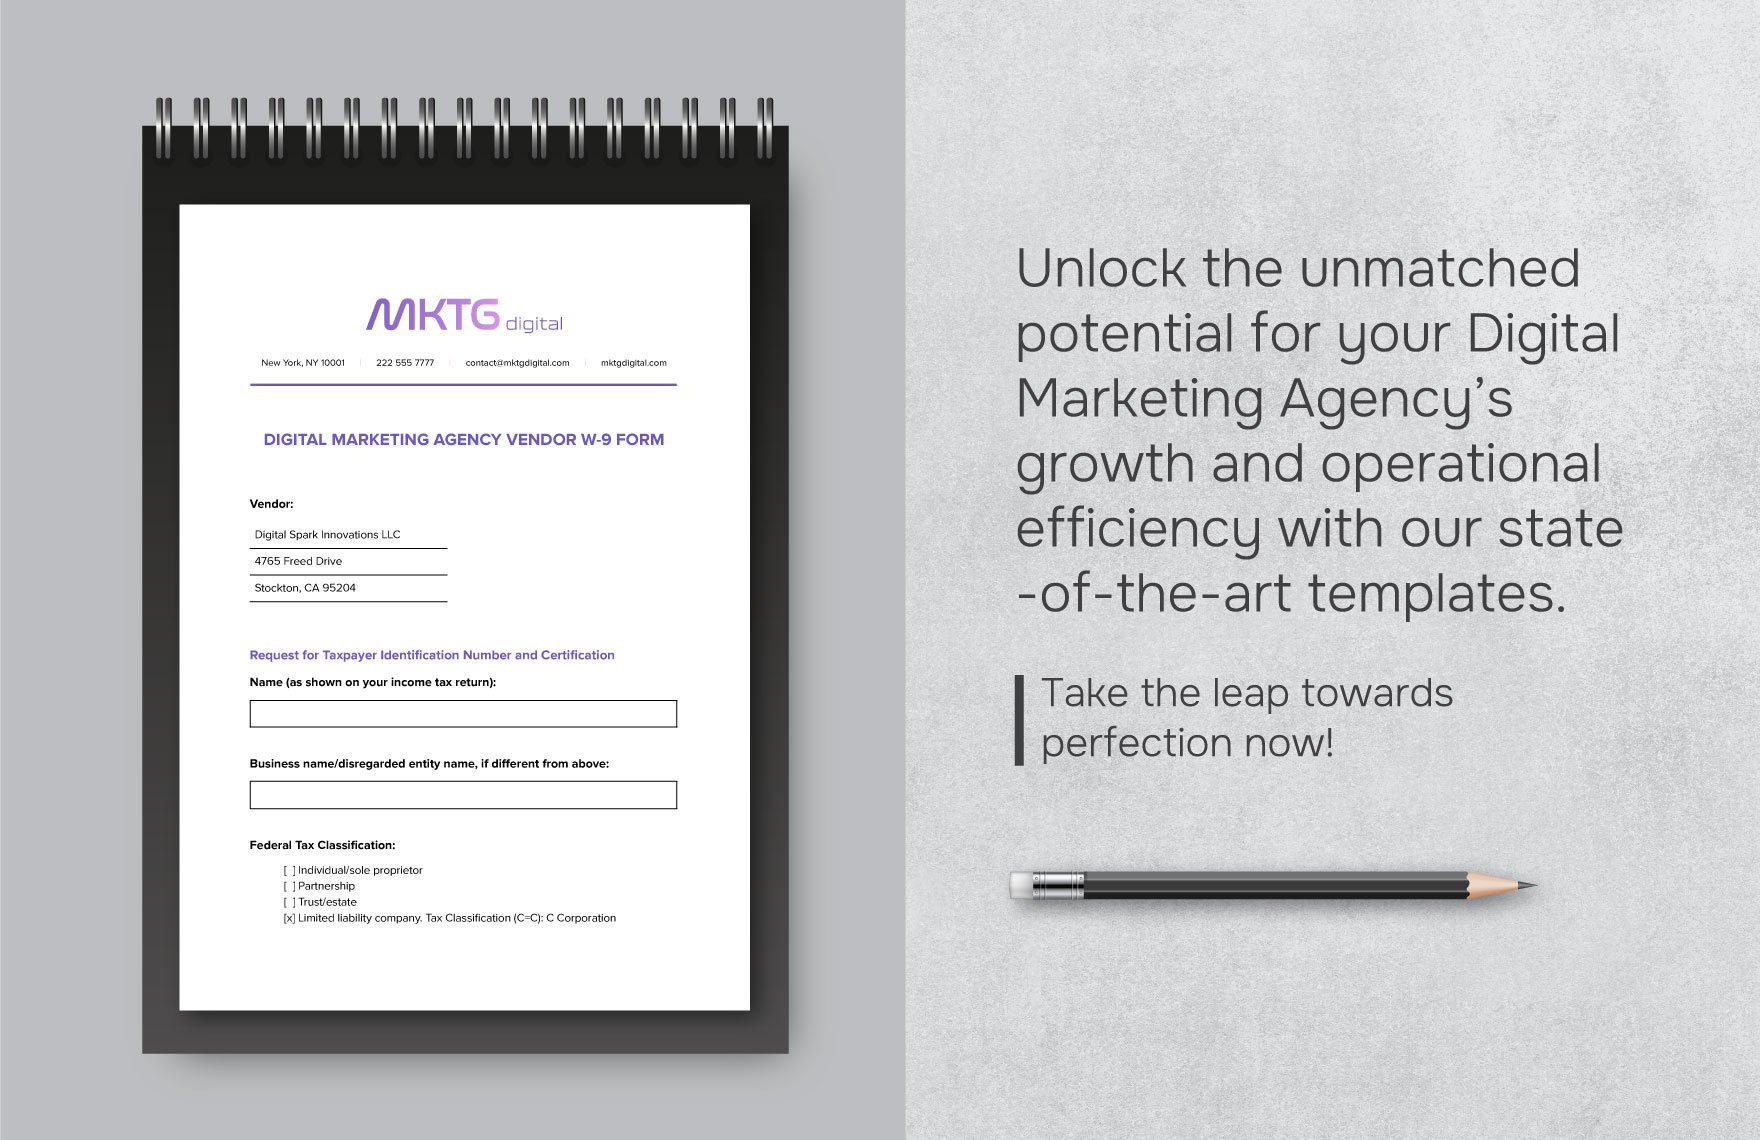 Digital Marketing Agency Vendor W-9 Form Template